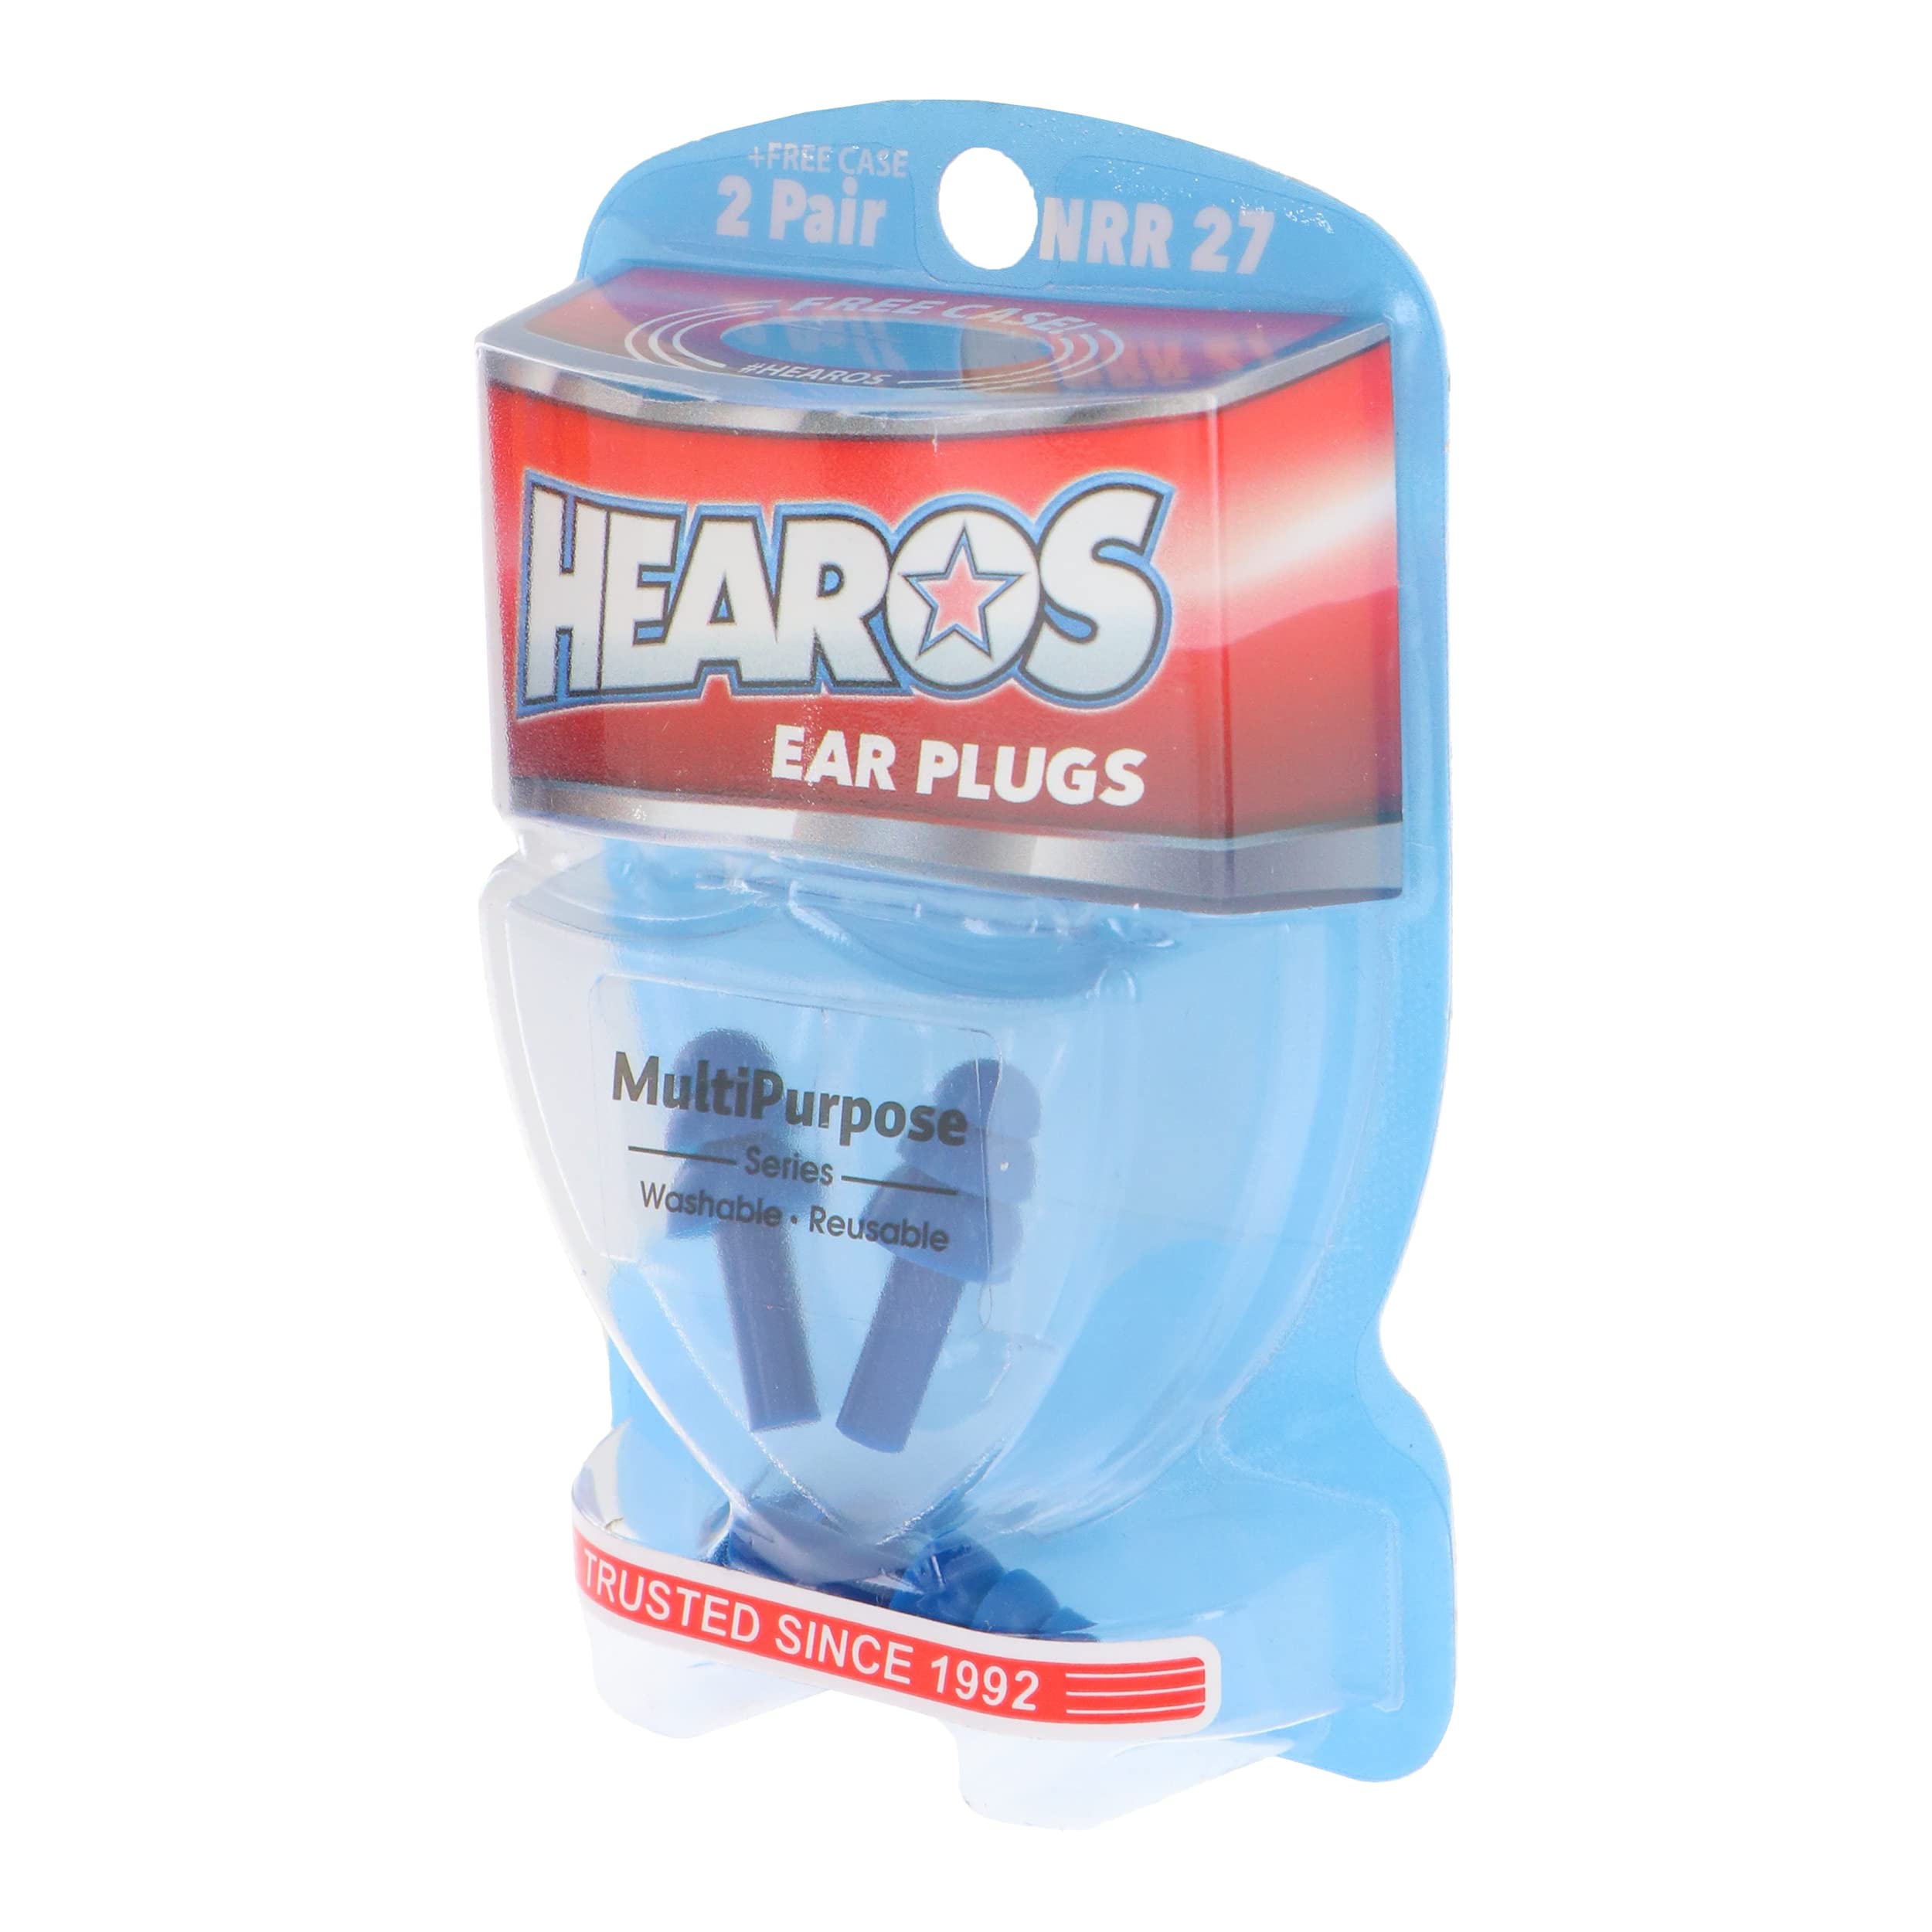 Hearos Multi-Purpose Series Ear Plugs, 4 Count